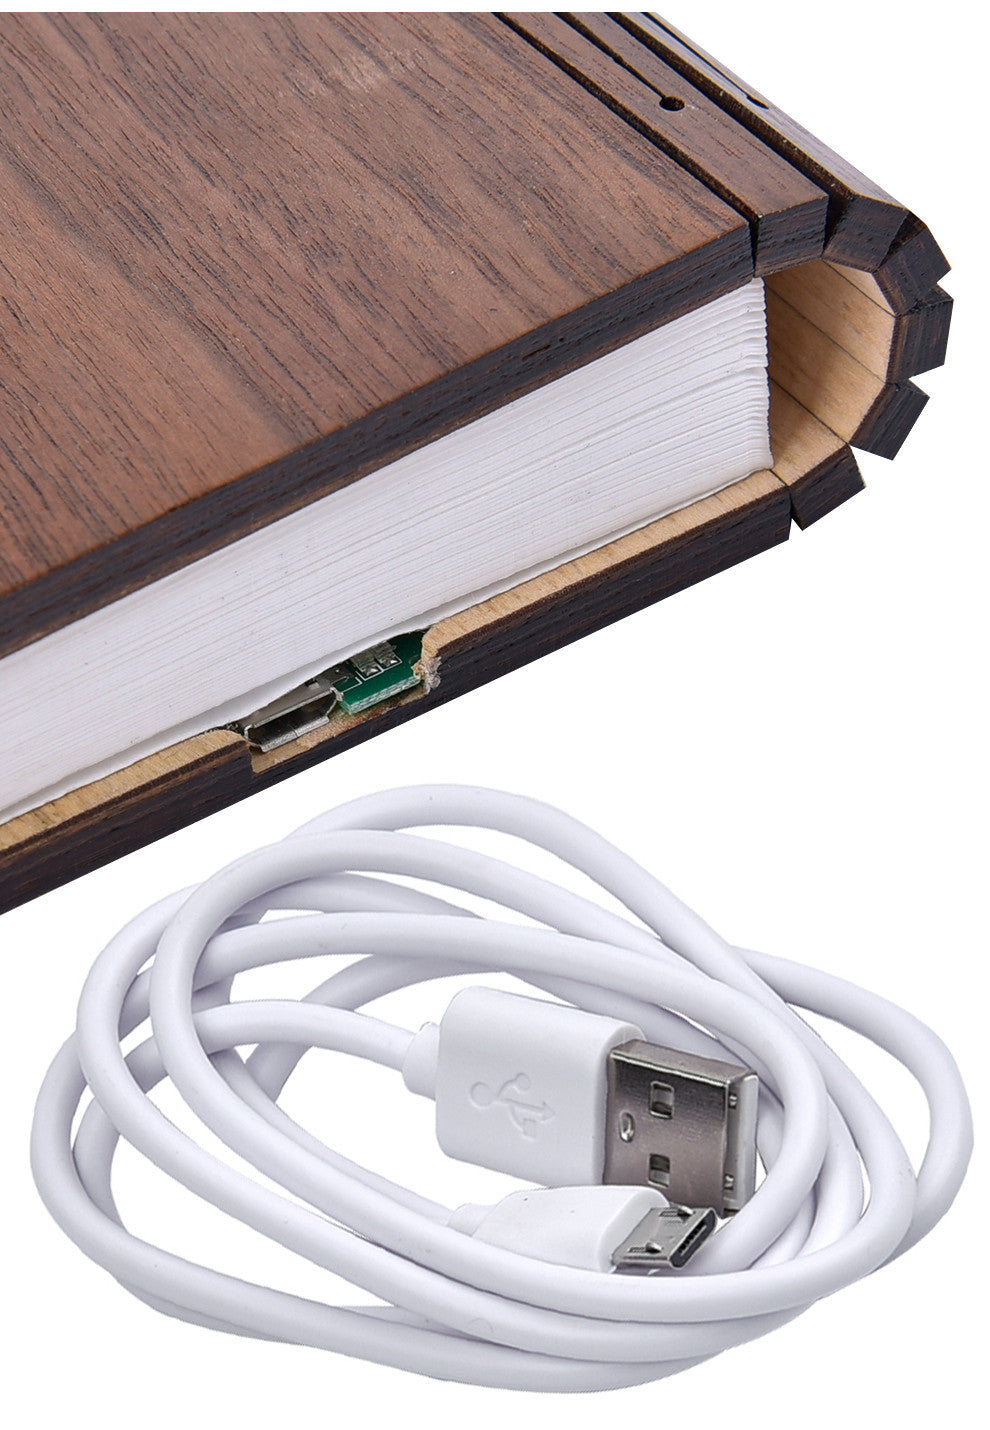 LED Night Light Folding Book Light USB Port Rechargeble Wood Magnet Lamp